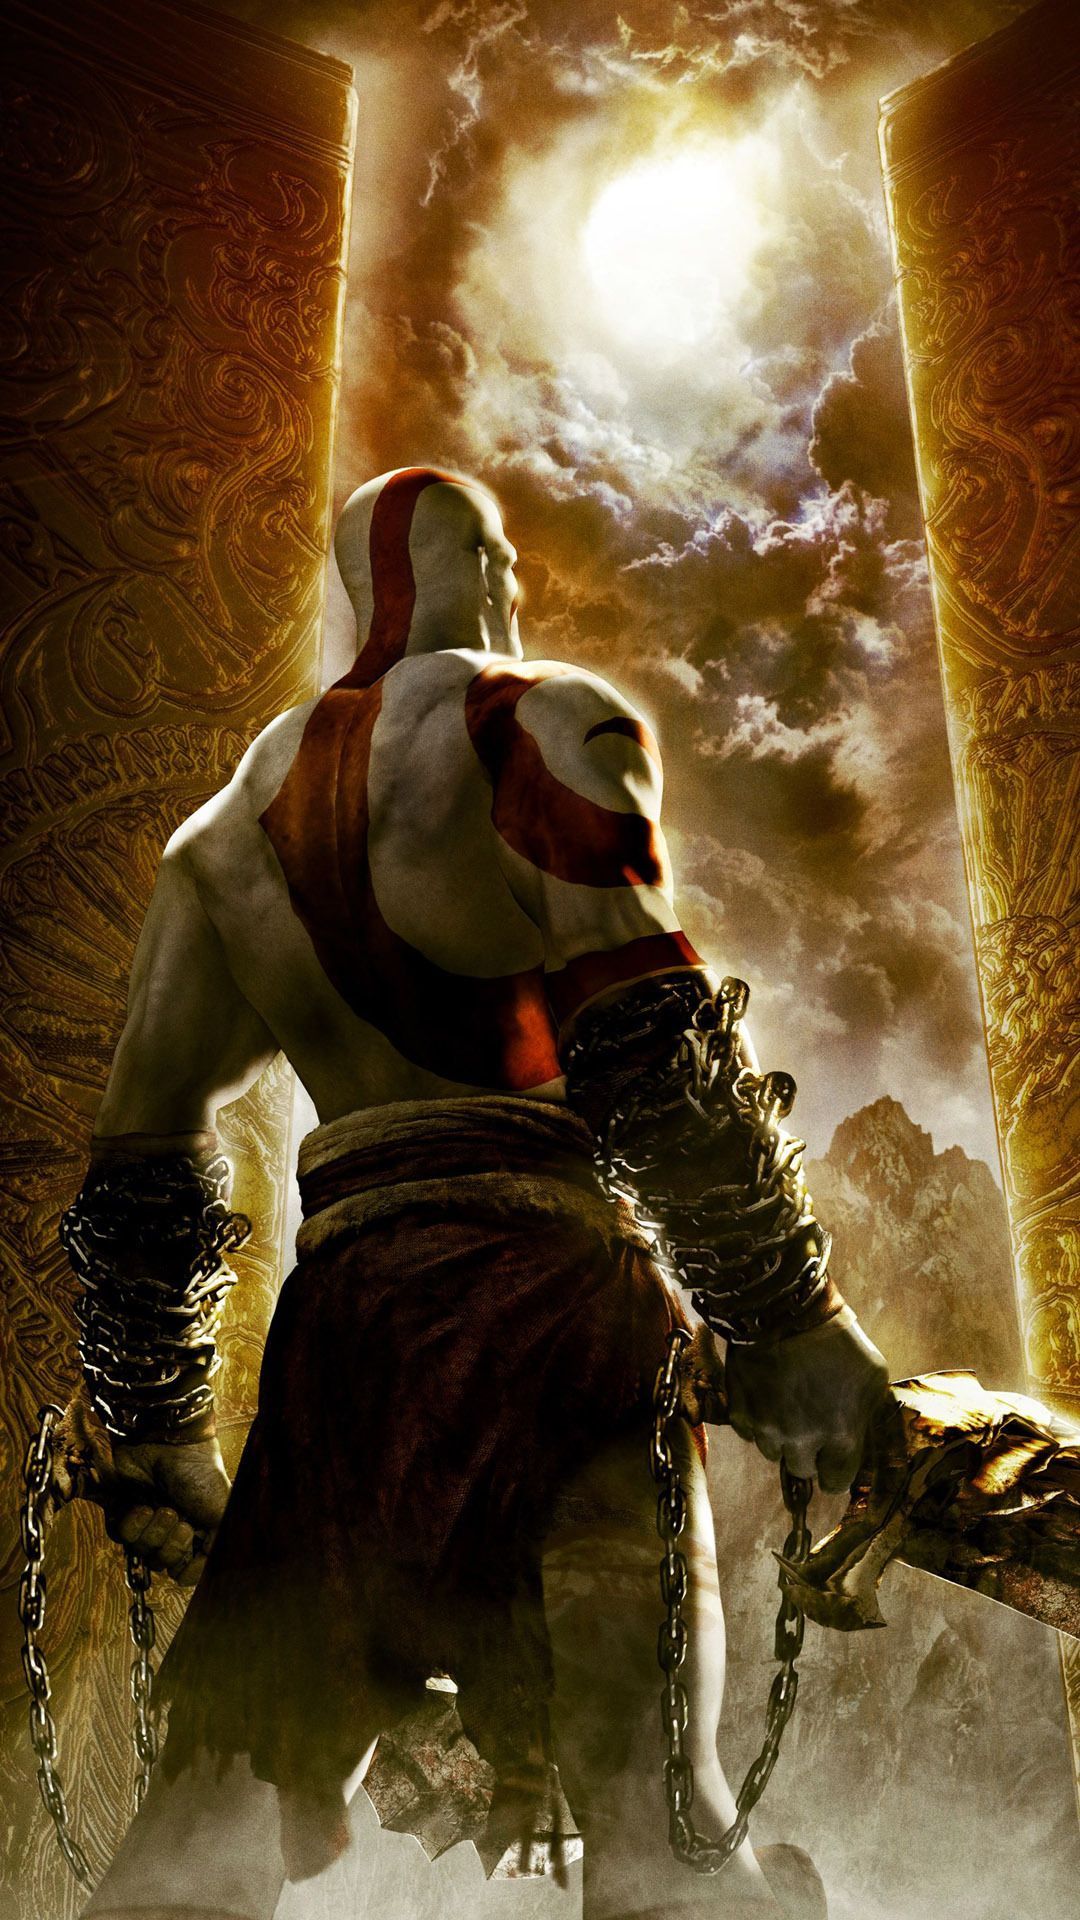 Download Wallpaper 1080x1920 Kratos, God of war, Face, Eyes, Scar. God of war, Kratos god of war, God of war series